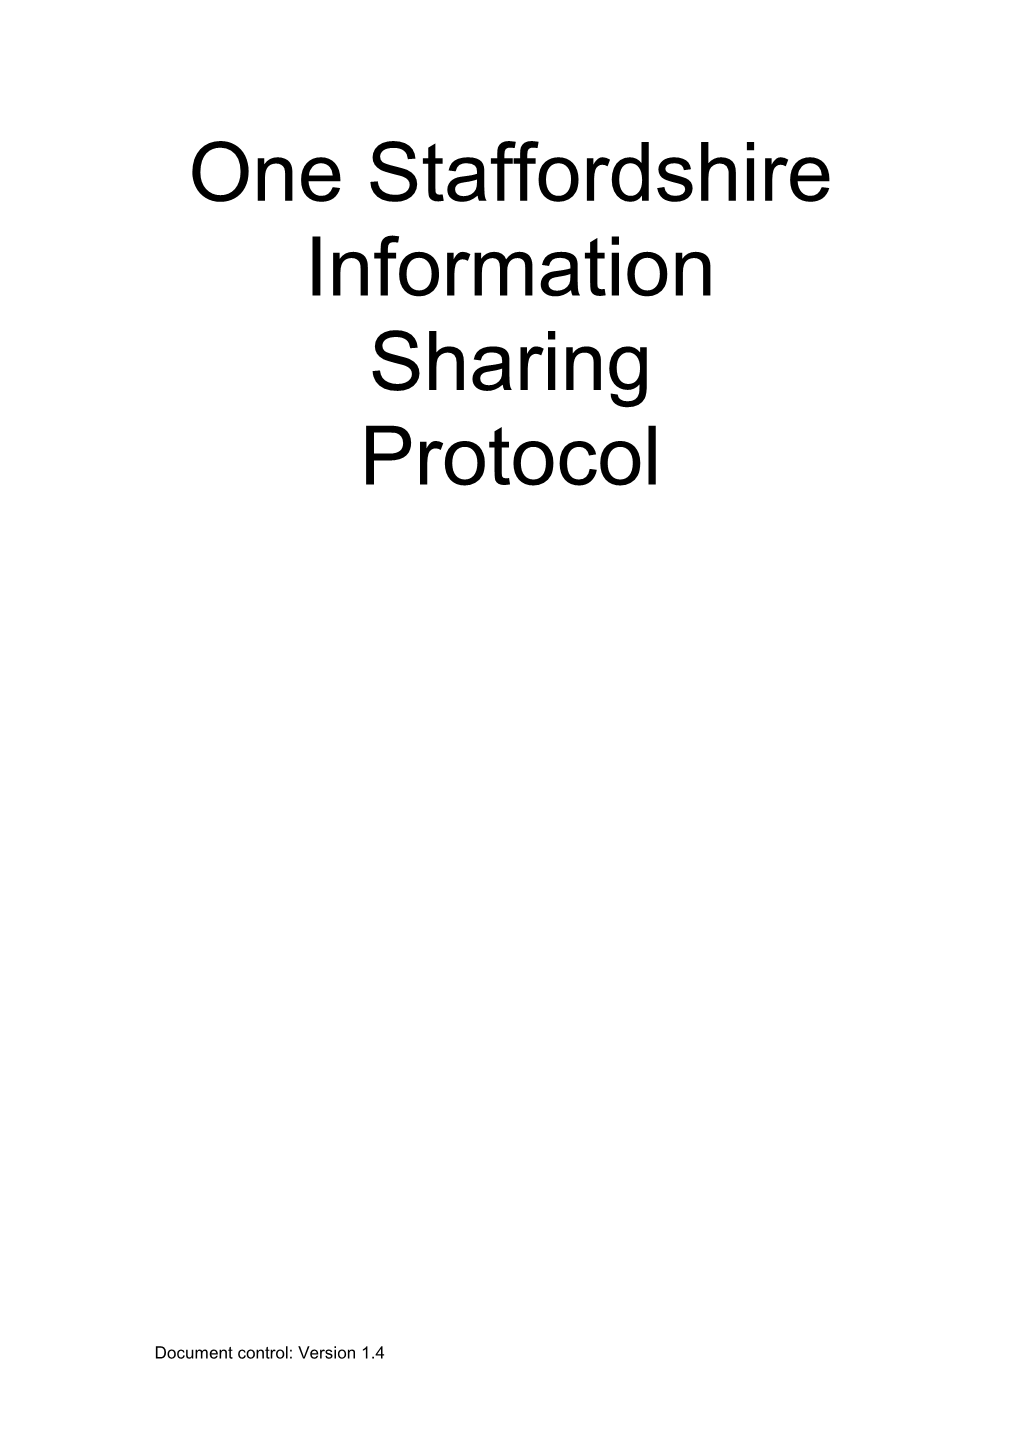 One Staffordshire Information Sharing Protocol